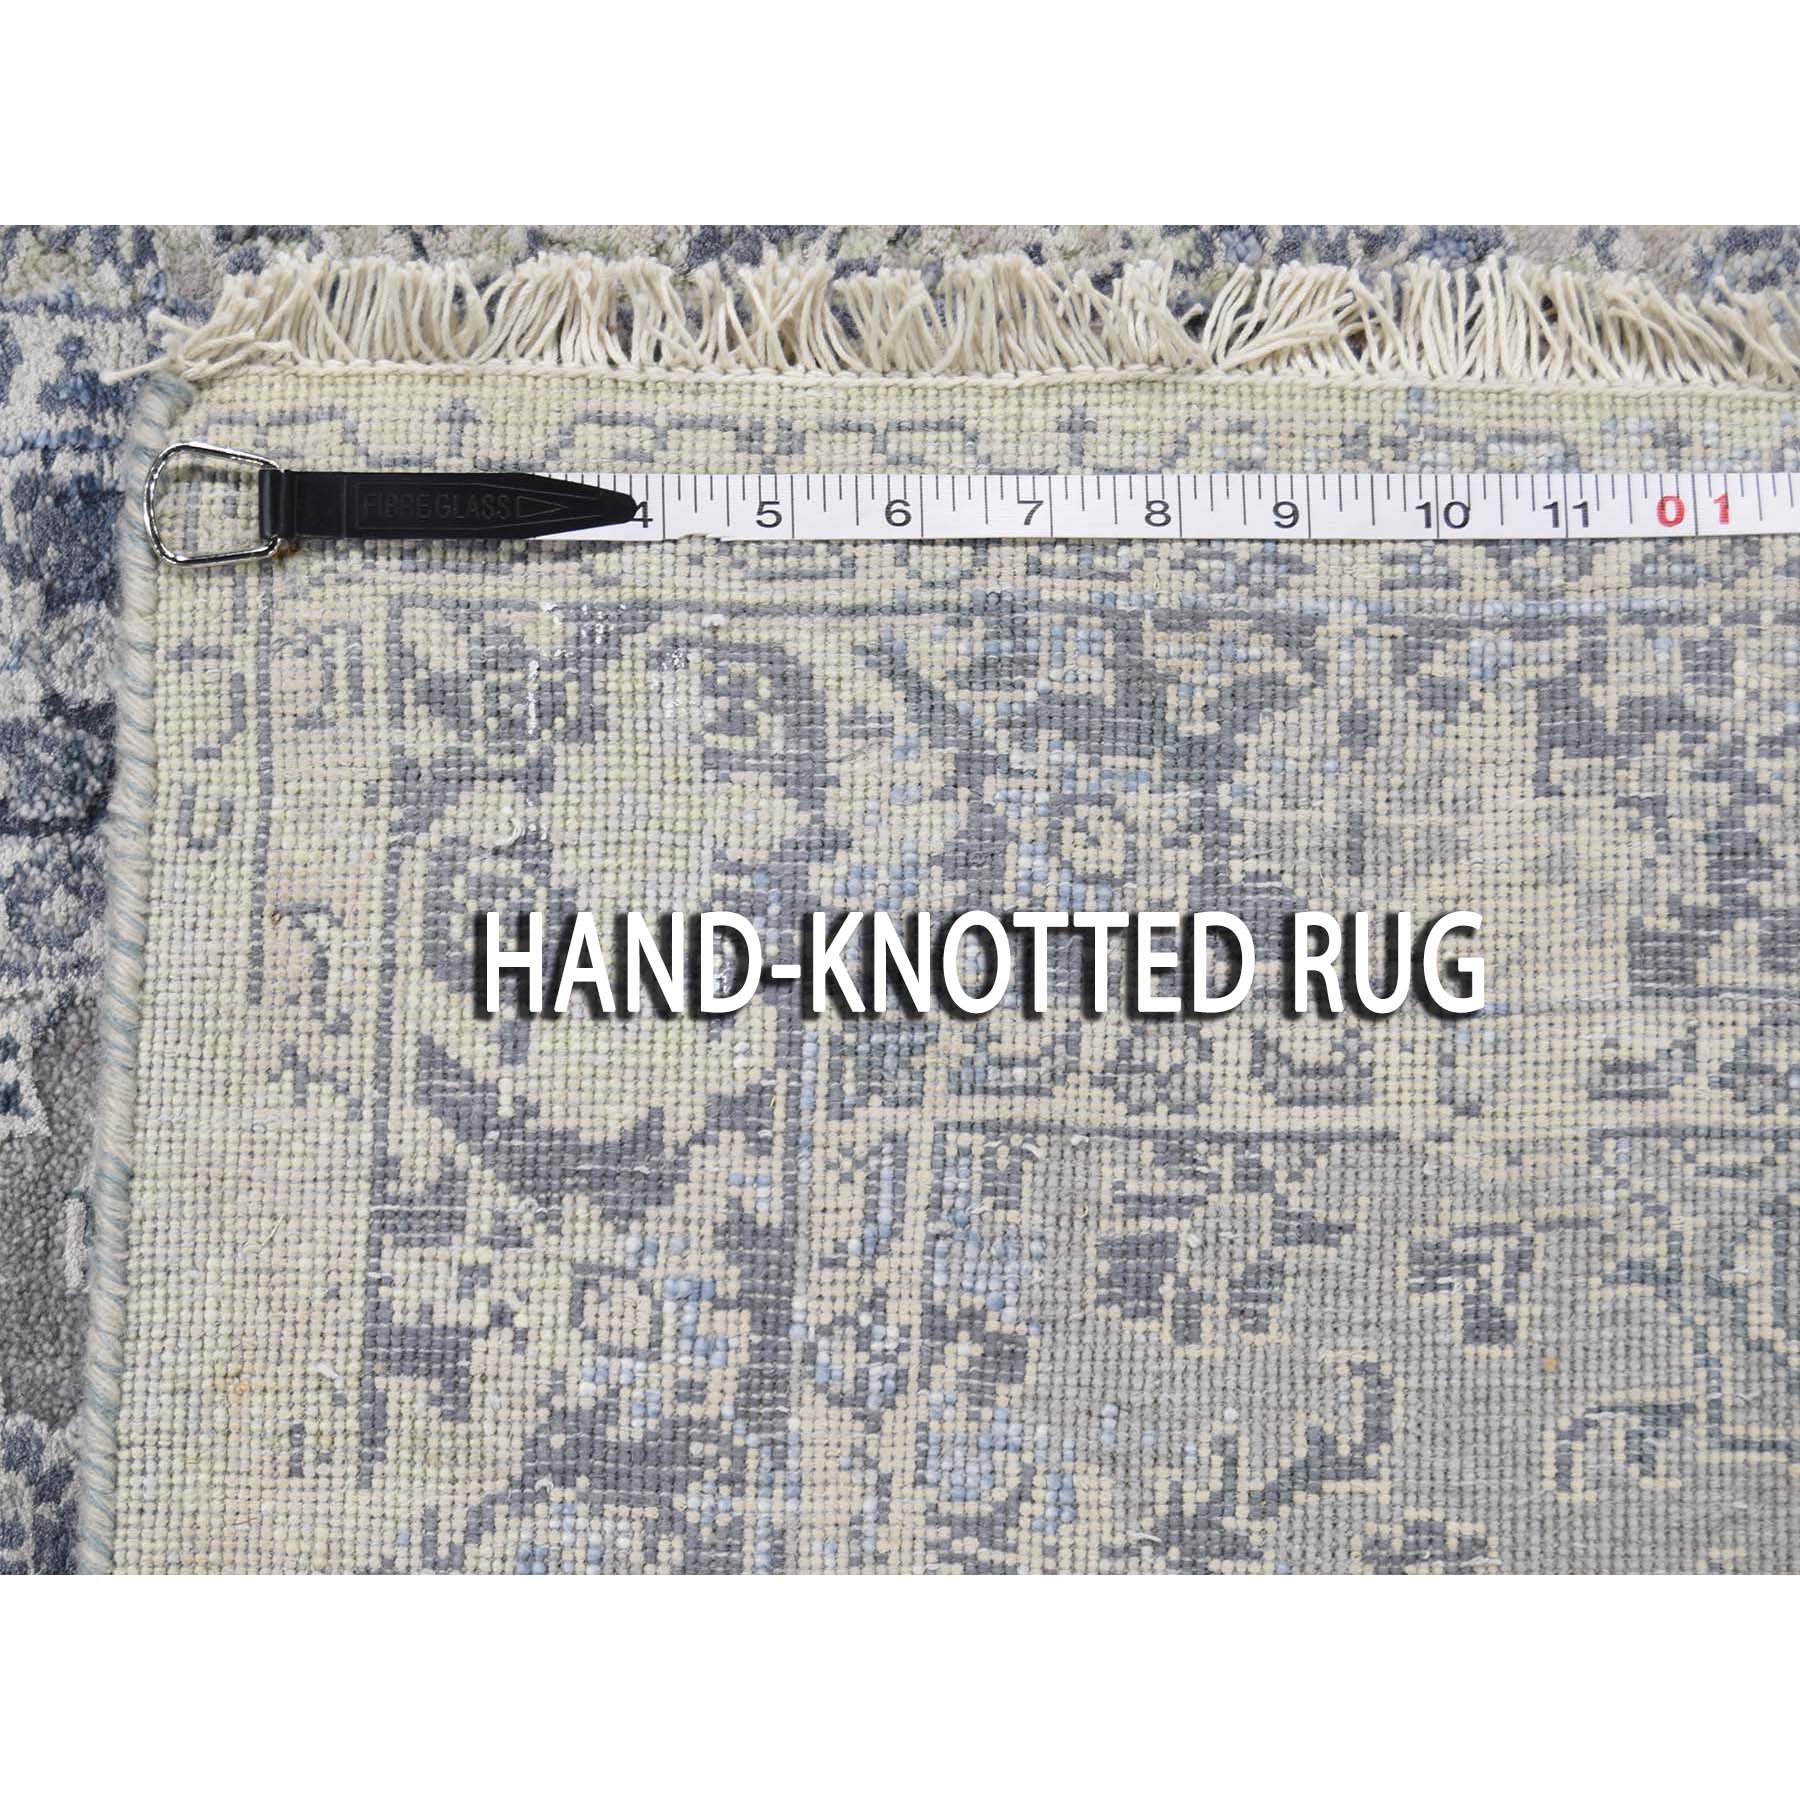 2'6"x6' Broken Persian Erased Design With Pure Silk Runner Hand Woven Oriental Rug 